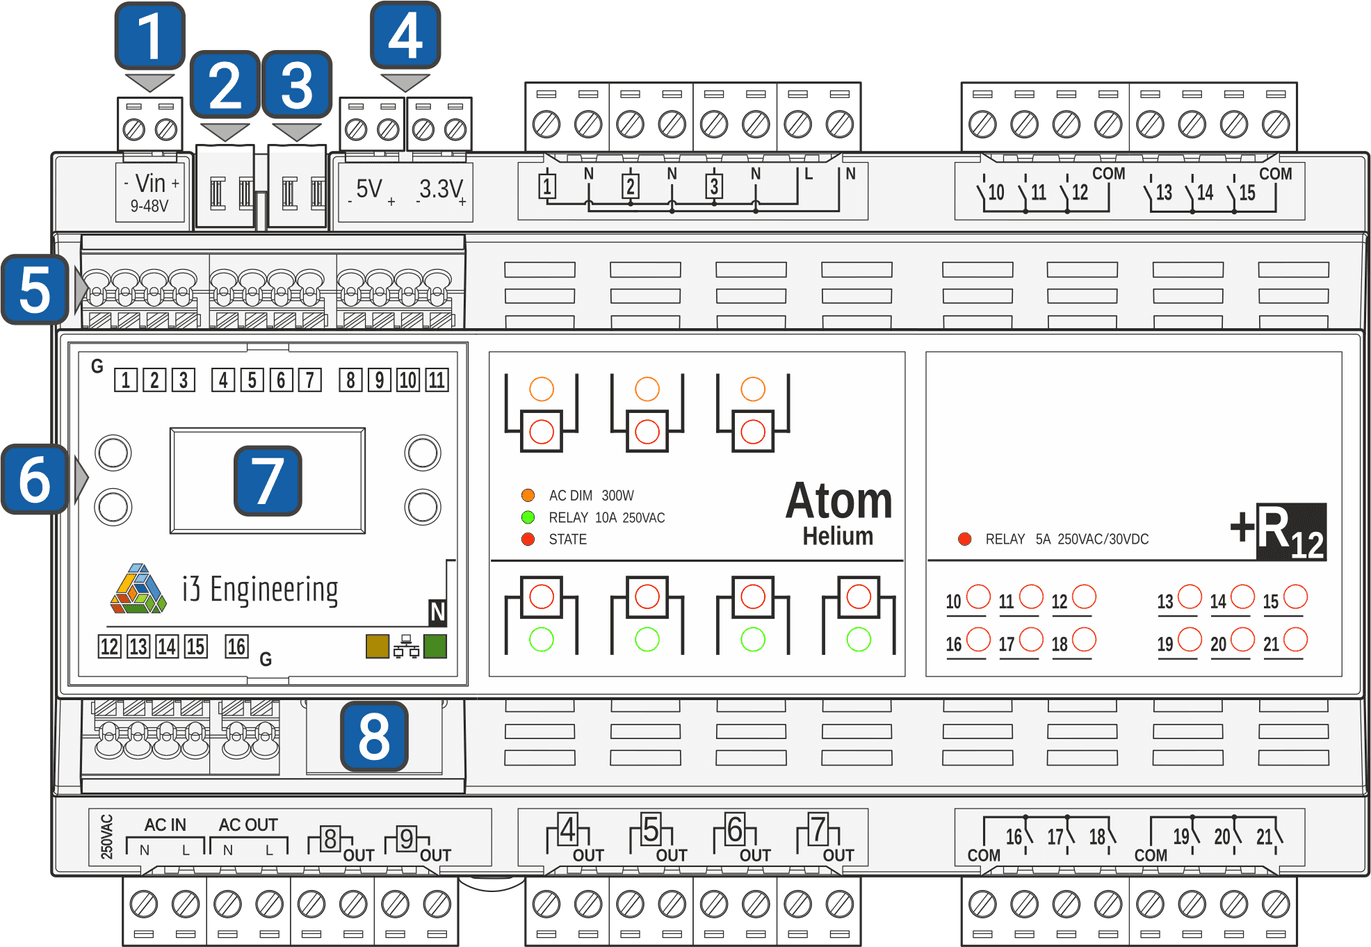 Atom Carbon N with numbers